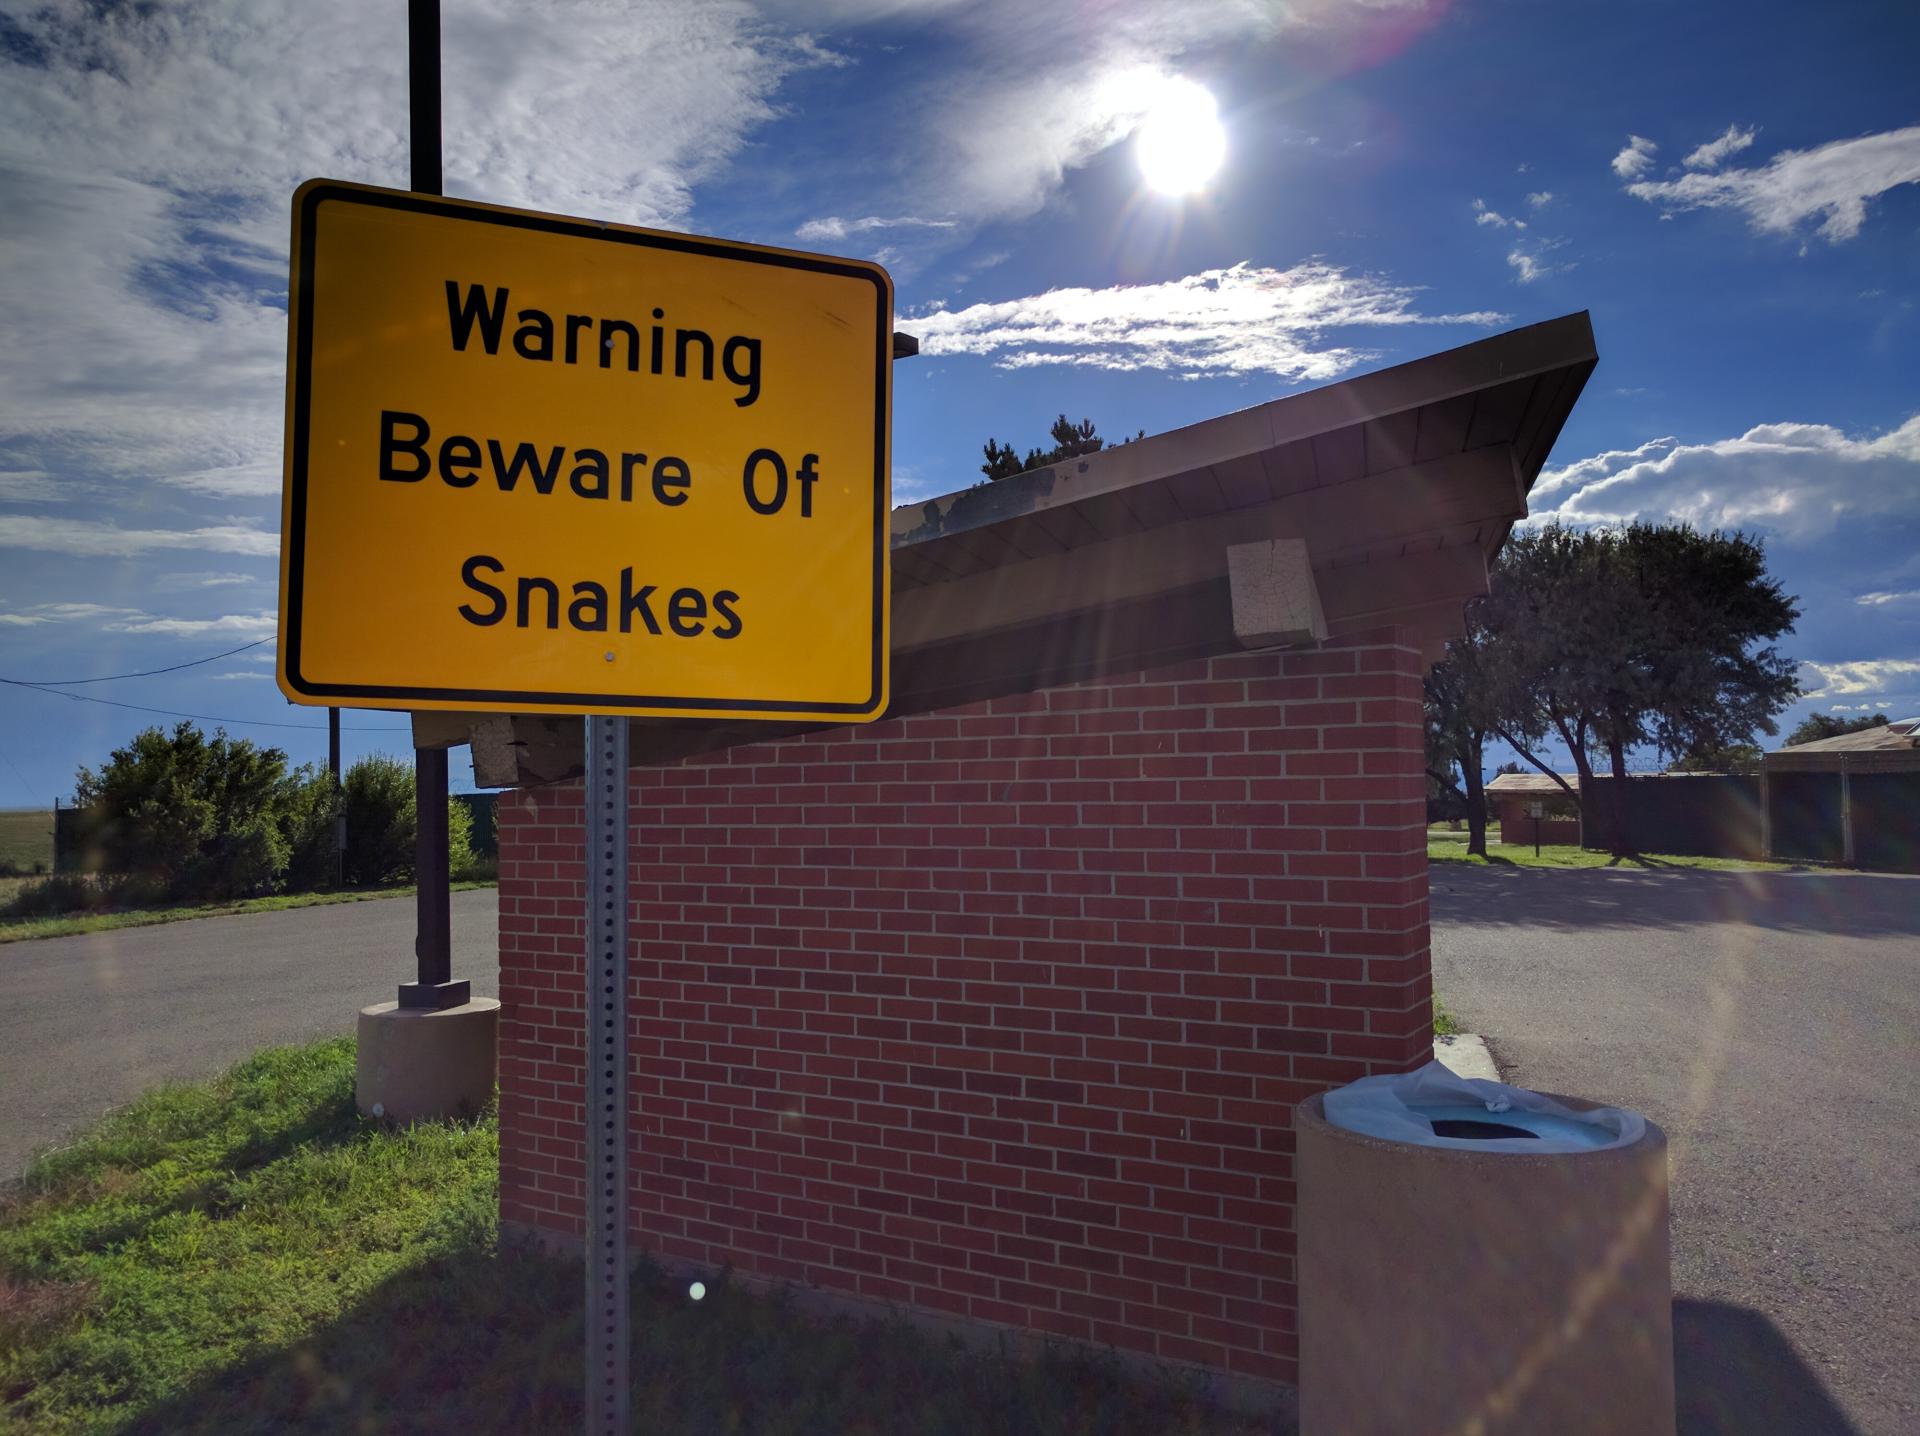 Beware of snakes!